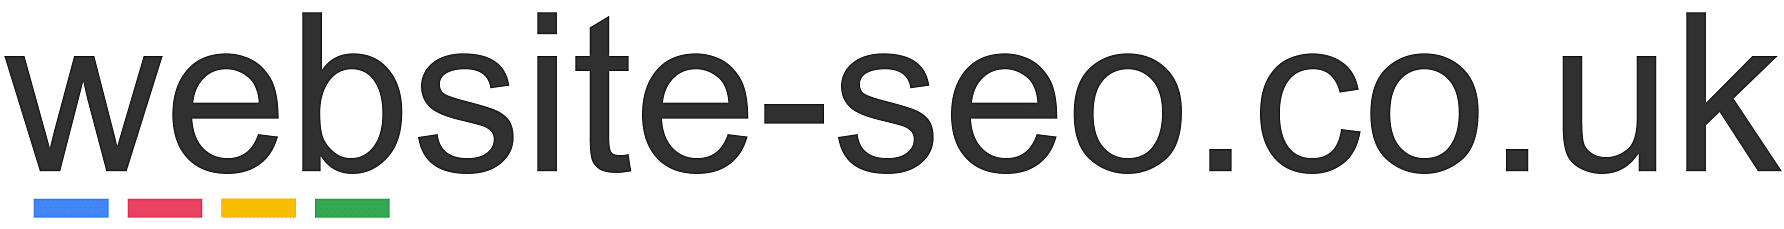 website-seo.co.uk logo | web designer and seo expert